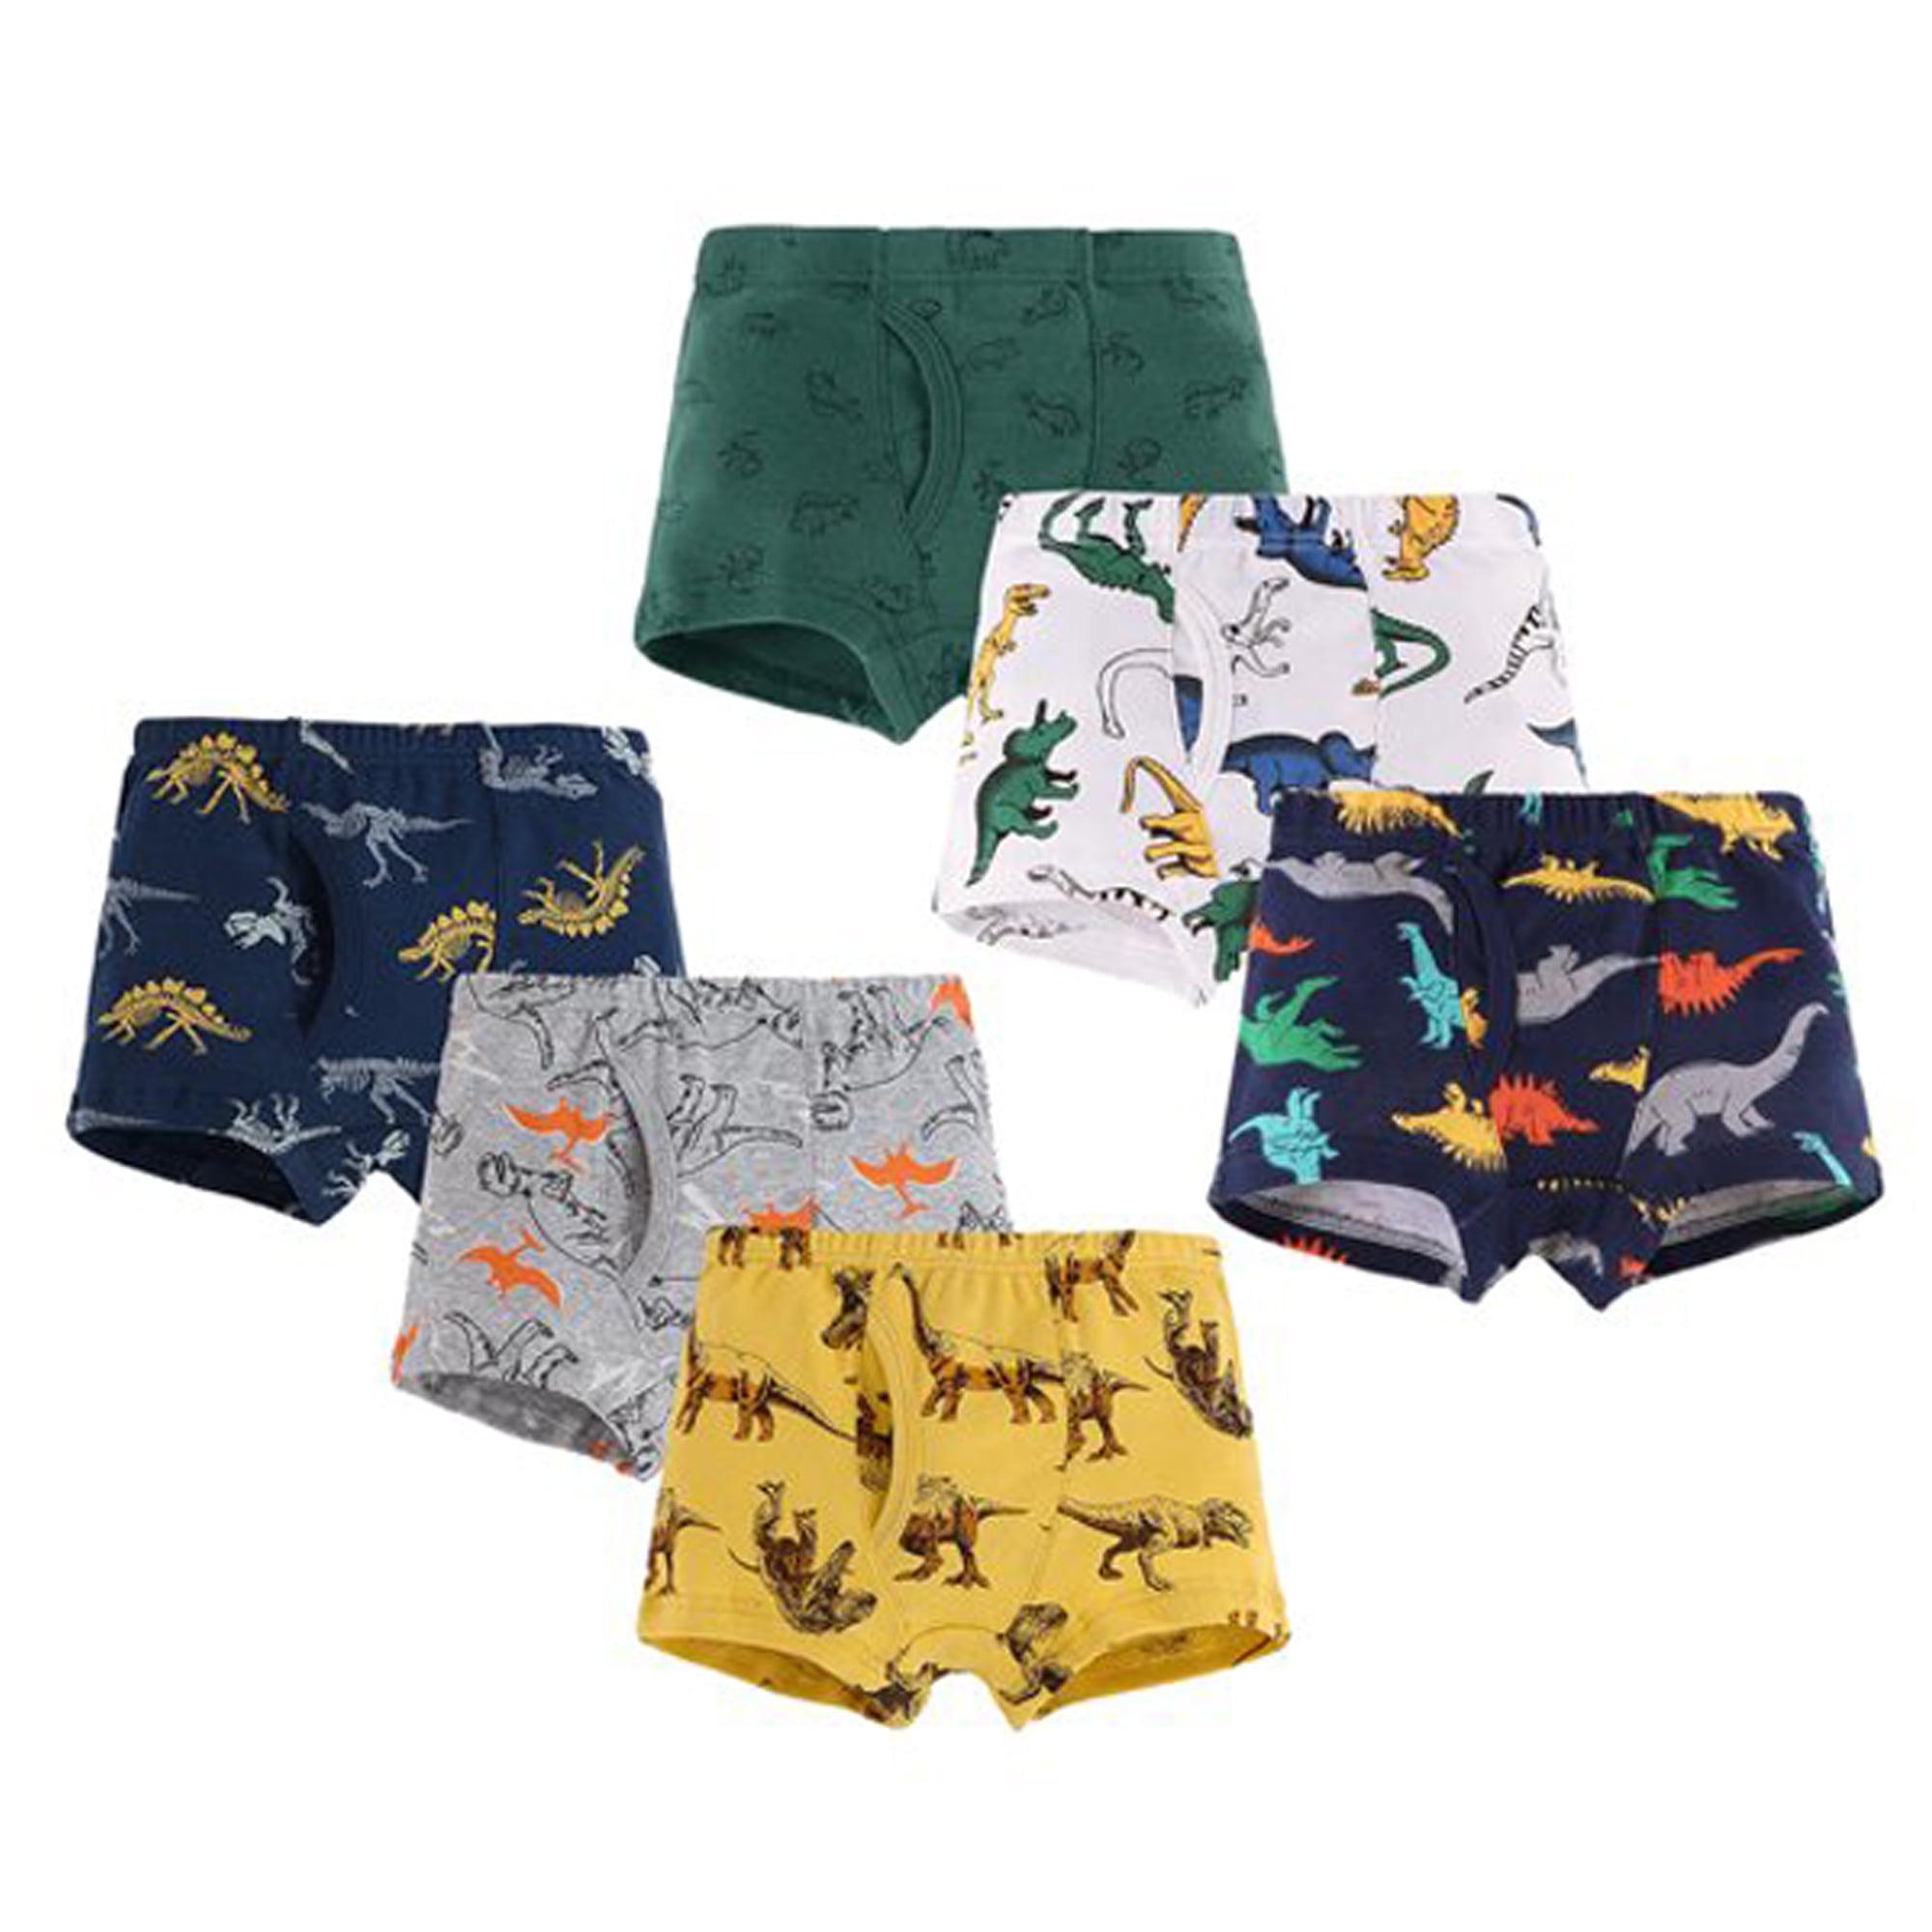  Boys Underwear Toddler Size 3T 100% Organic Cotton Boxer  Briefs Kids Dinosaur Ship Boxers Soft Clothes Childrens Undies Age 3 Years  Old Underpants